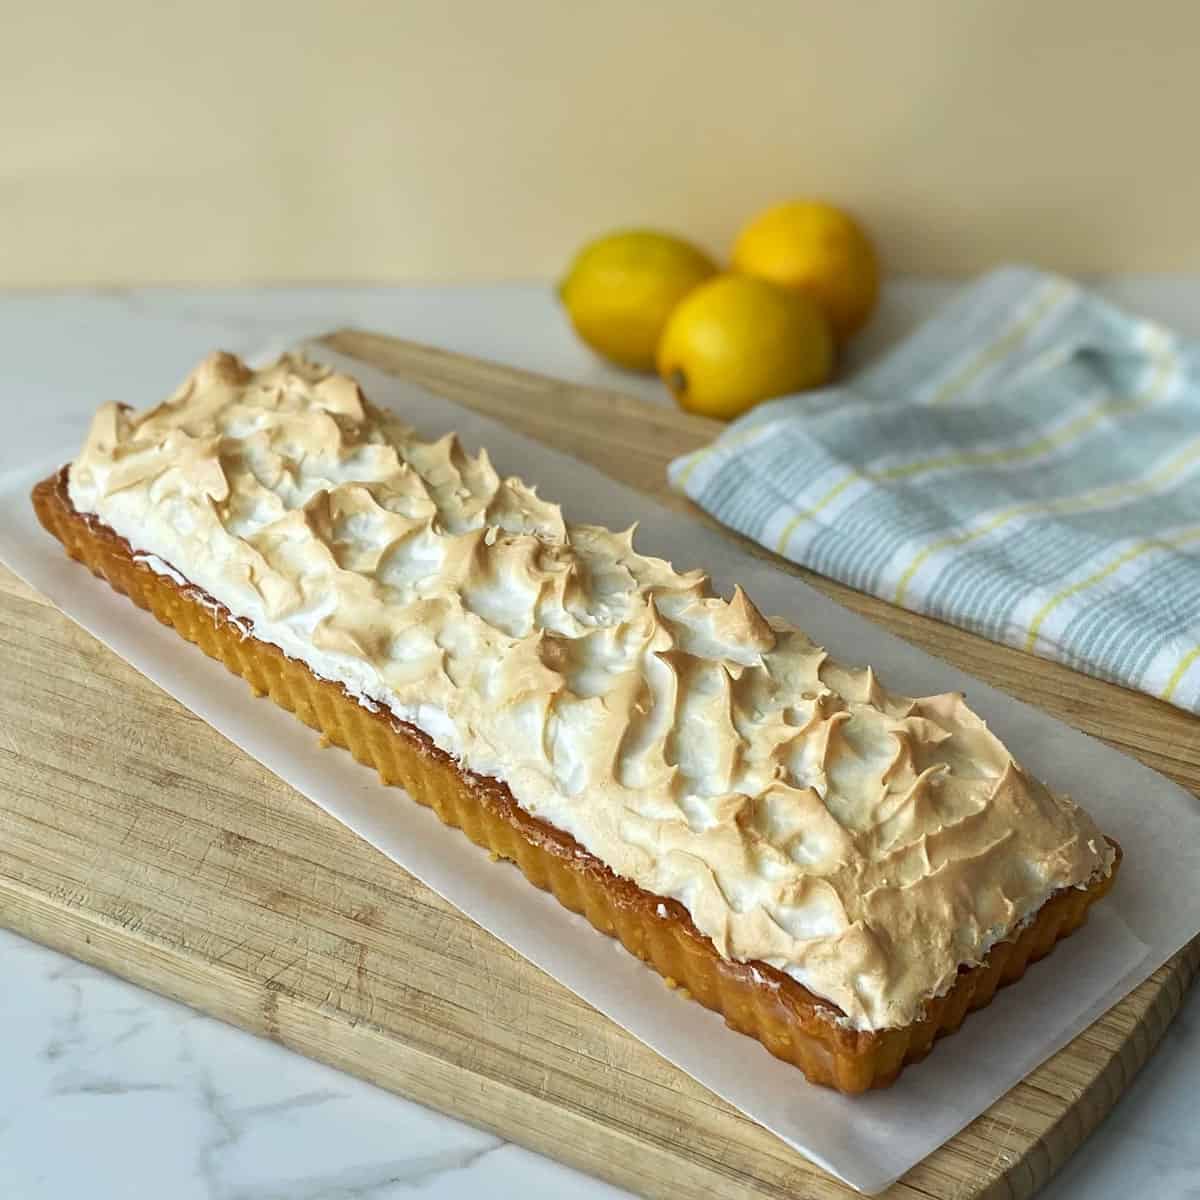 A baked, whole Lemon Meringue Pie on a wooden chopping board.